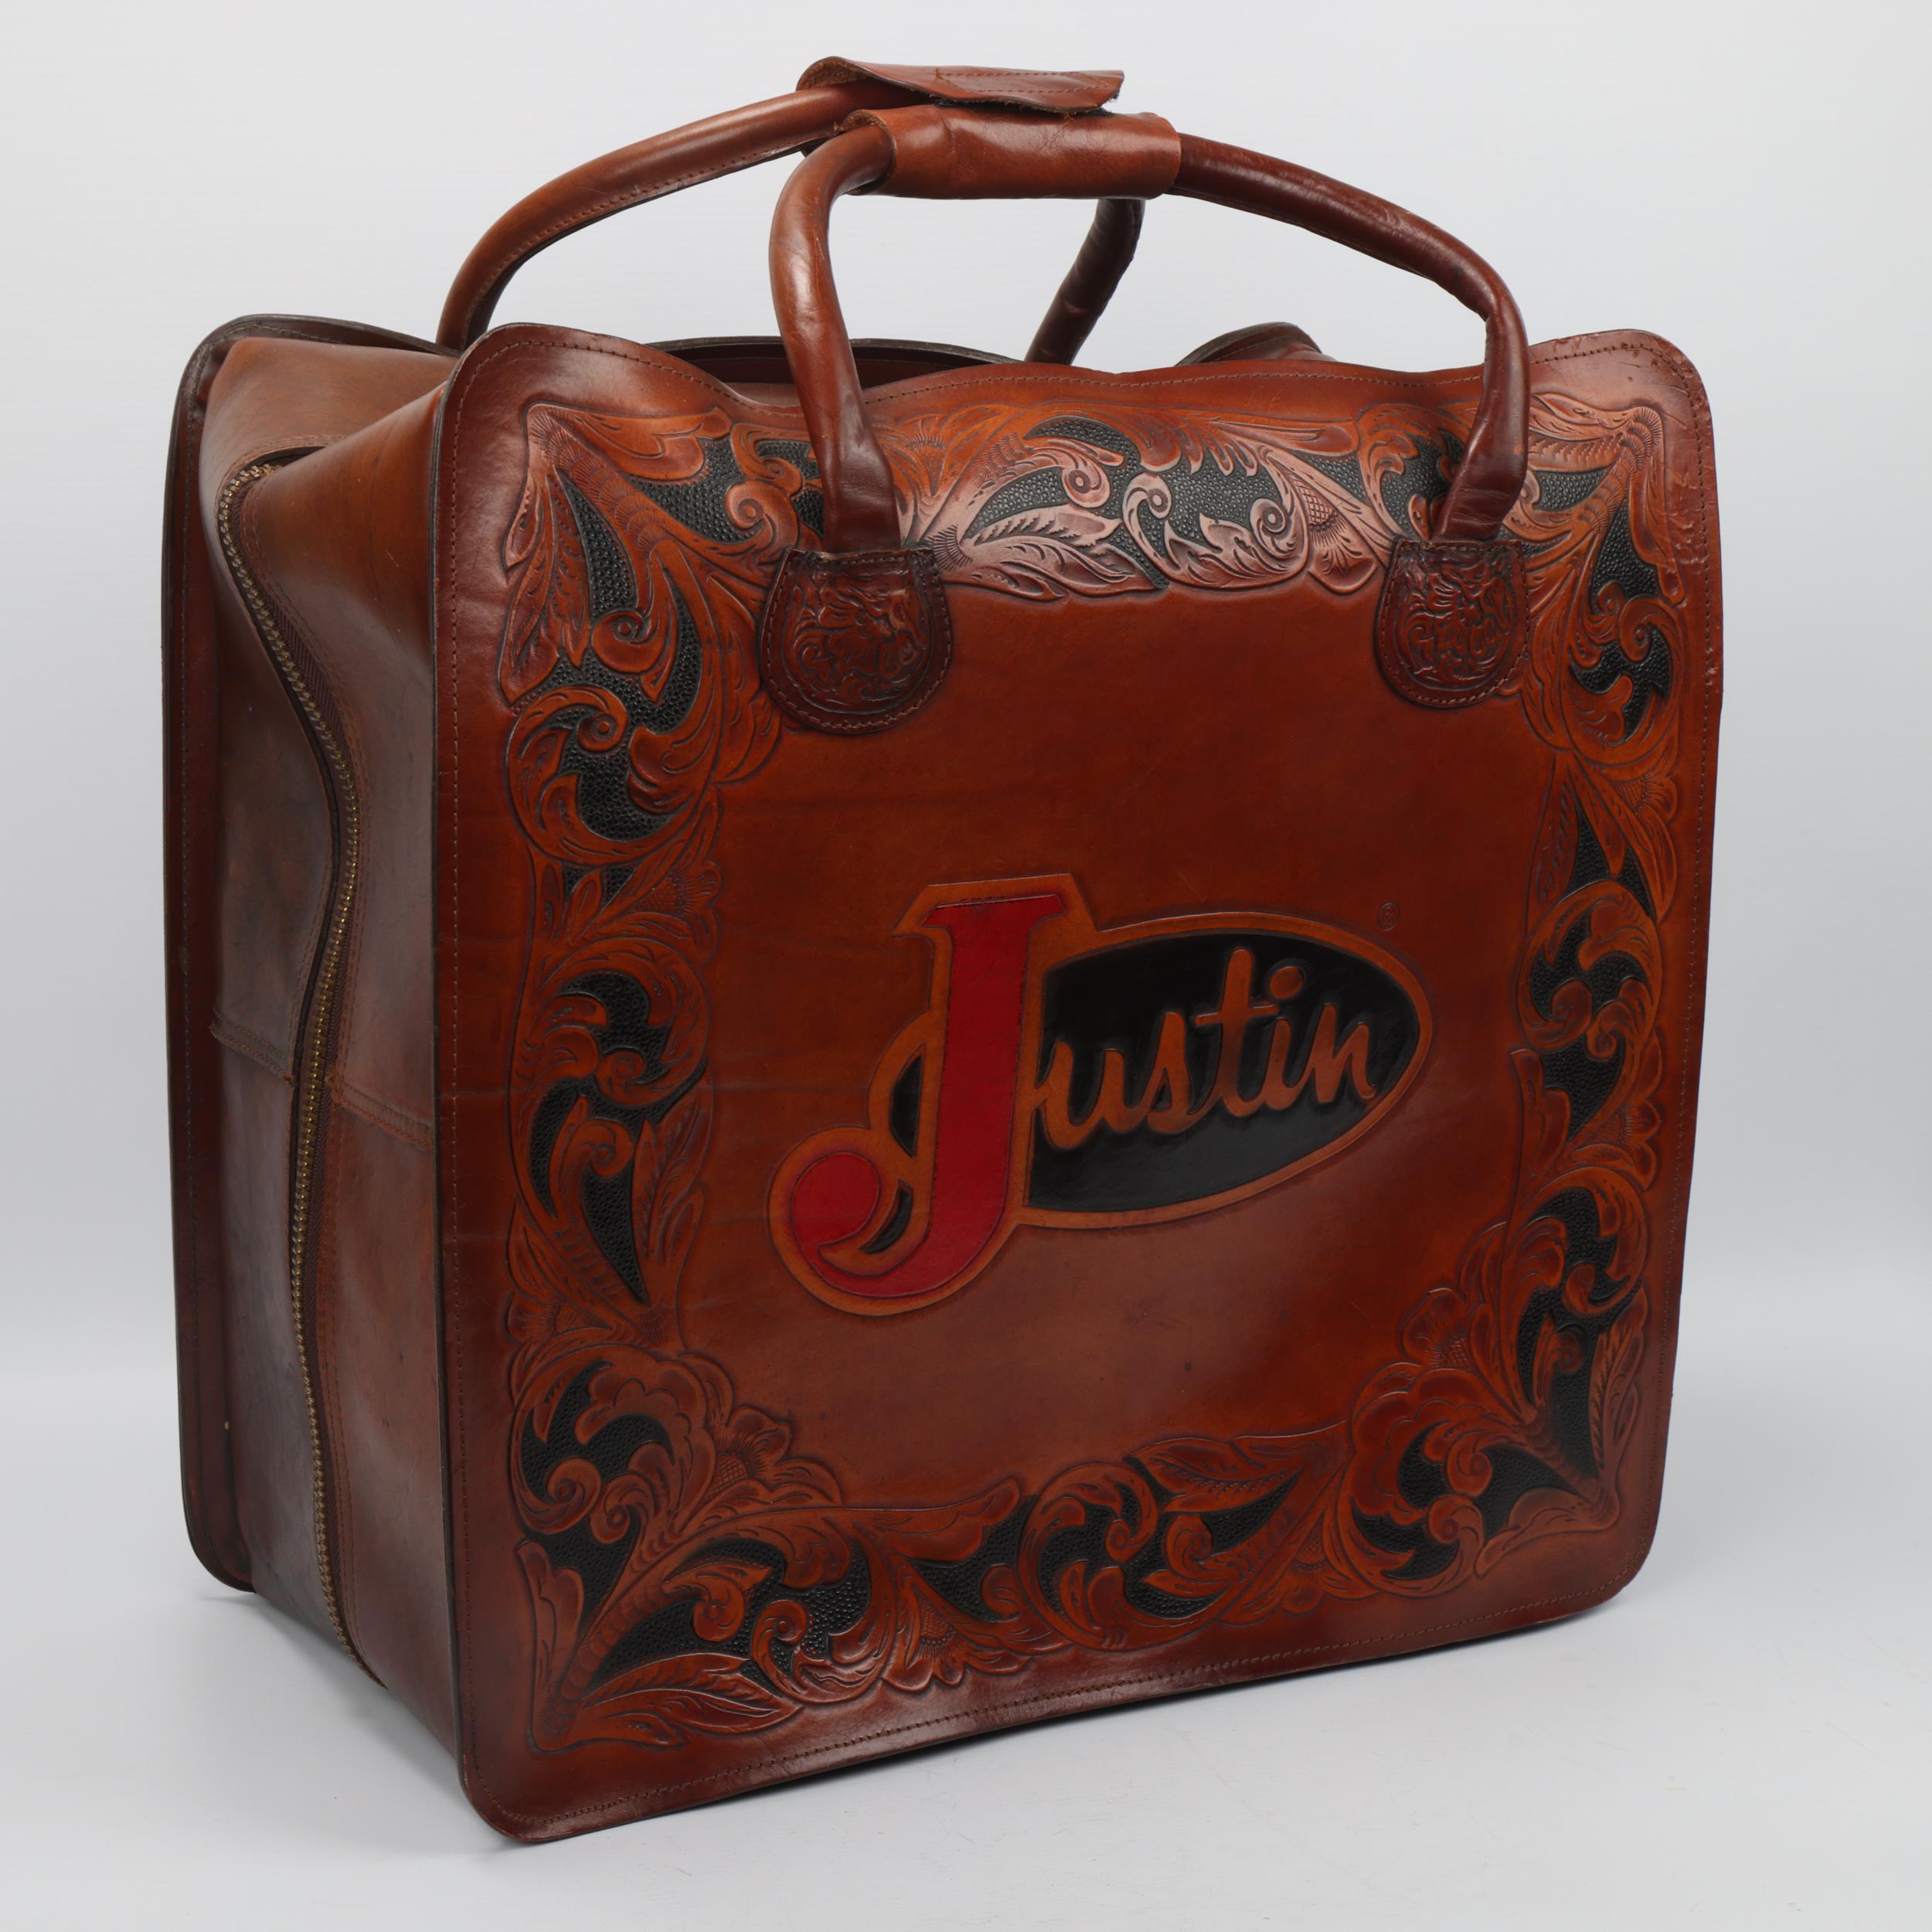 JIMI HENDRIX / MITCH MITCHELL INTEREST - A 'Justin' Brand (USA) Leather Bowling Bag. - Image 2 of 3